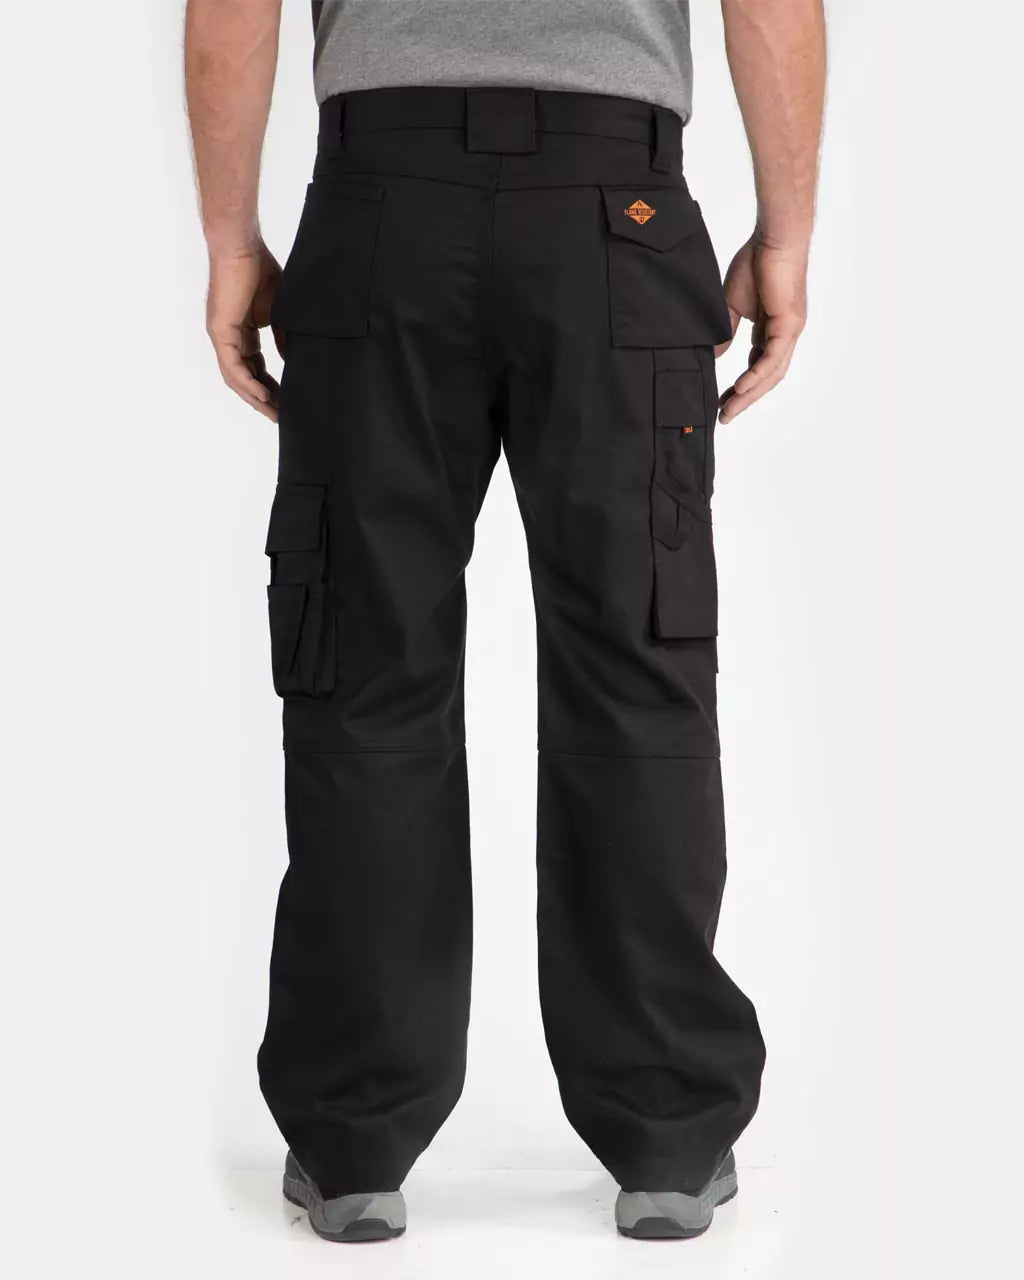 Bootcut Cargo Pants - Hunter Camo | Cargo pants outfit men, Best cargo pants,  Streetwear men outfits